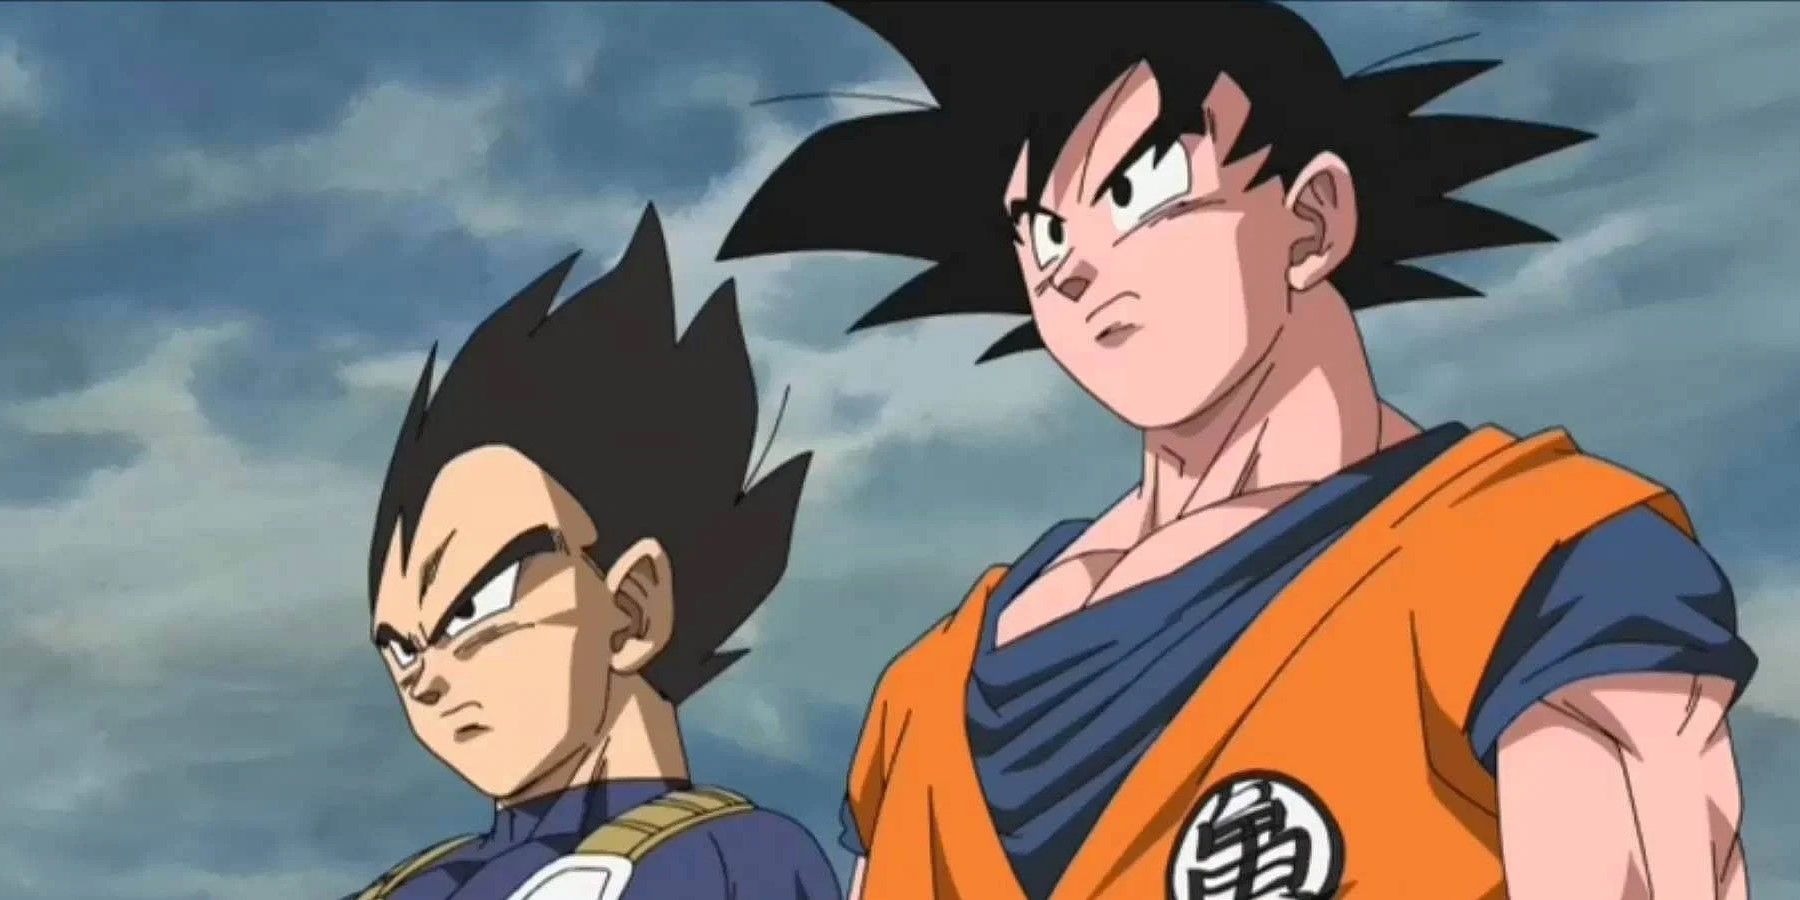 Goku and Vegeta - Highlighting Rivalry in Shonen